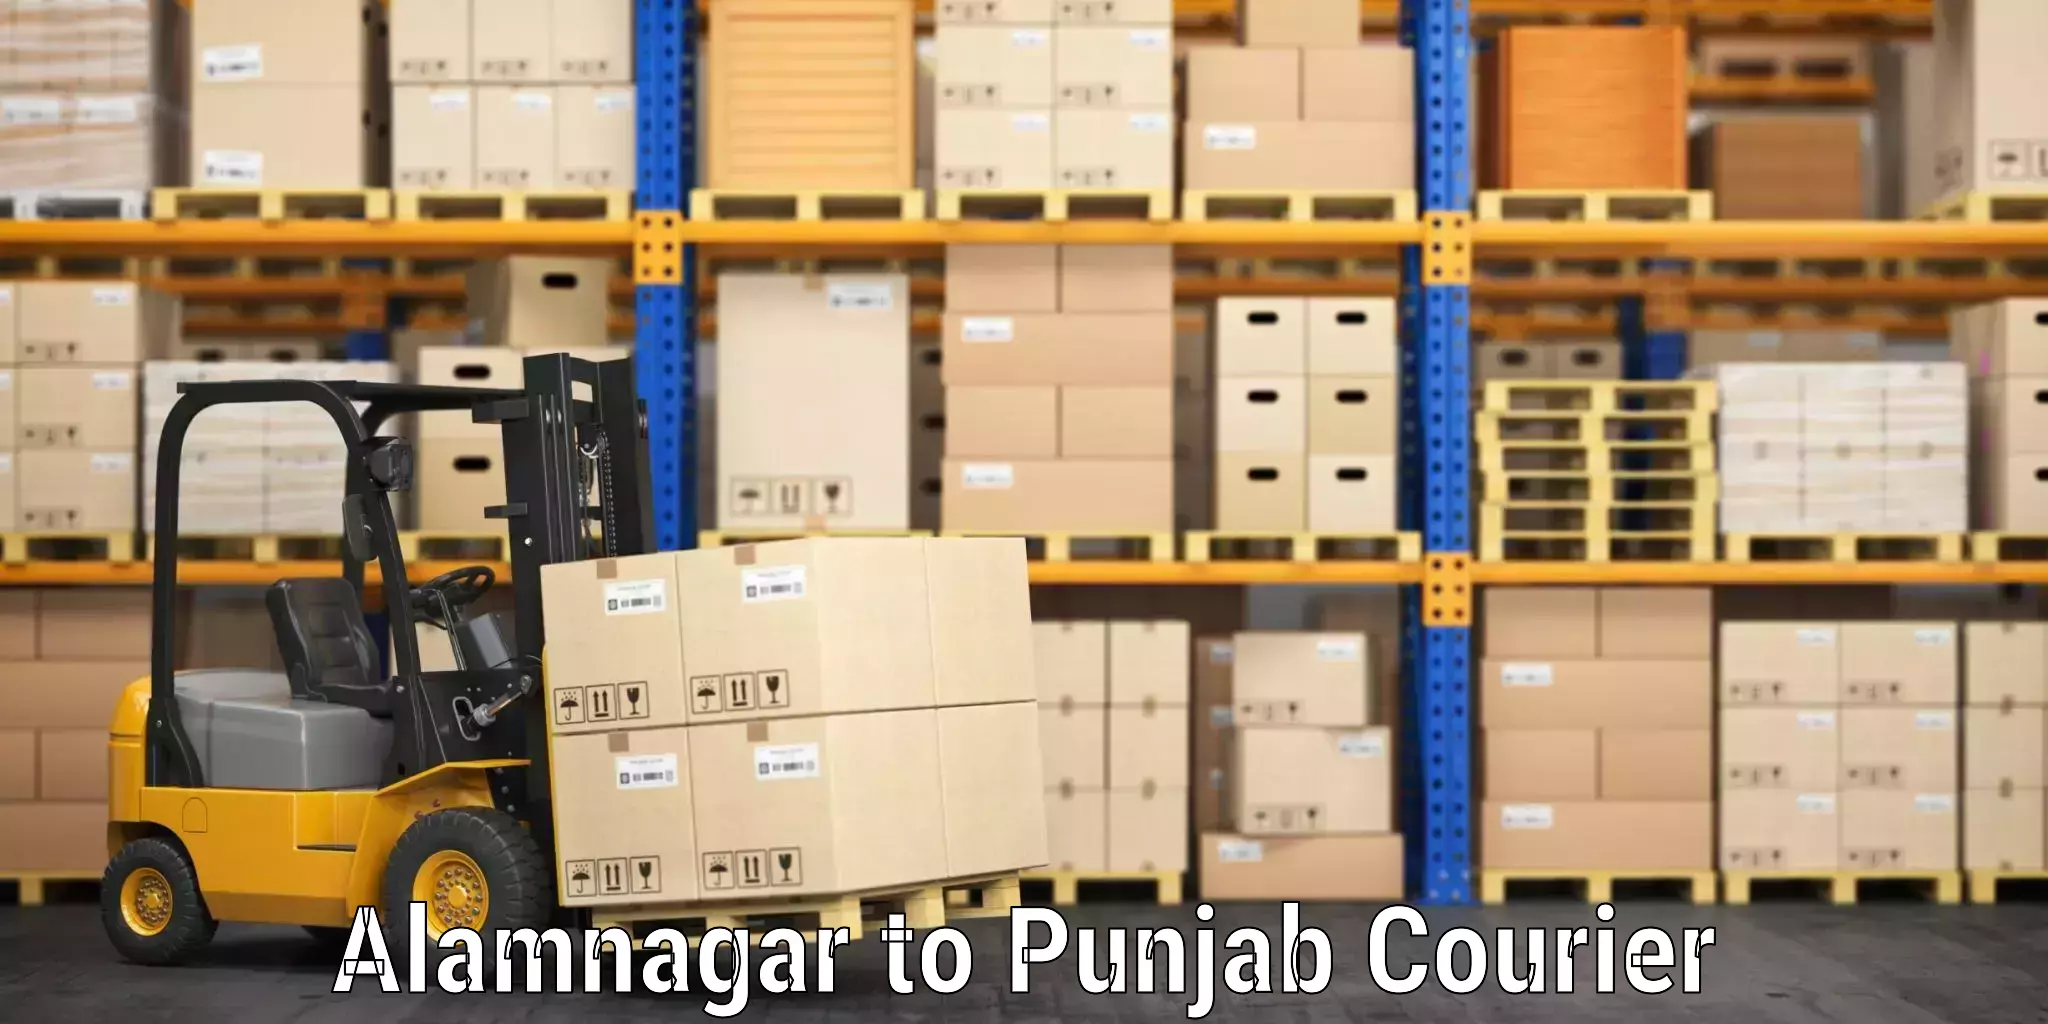 Instant baggage transport quote Alamnagar to Punjab